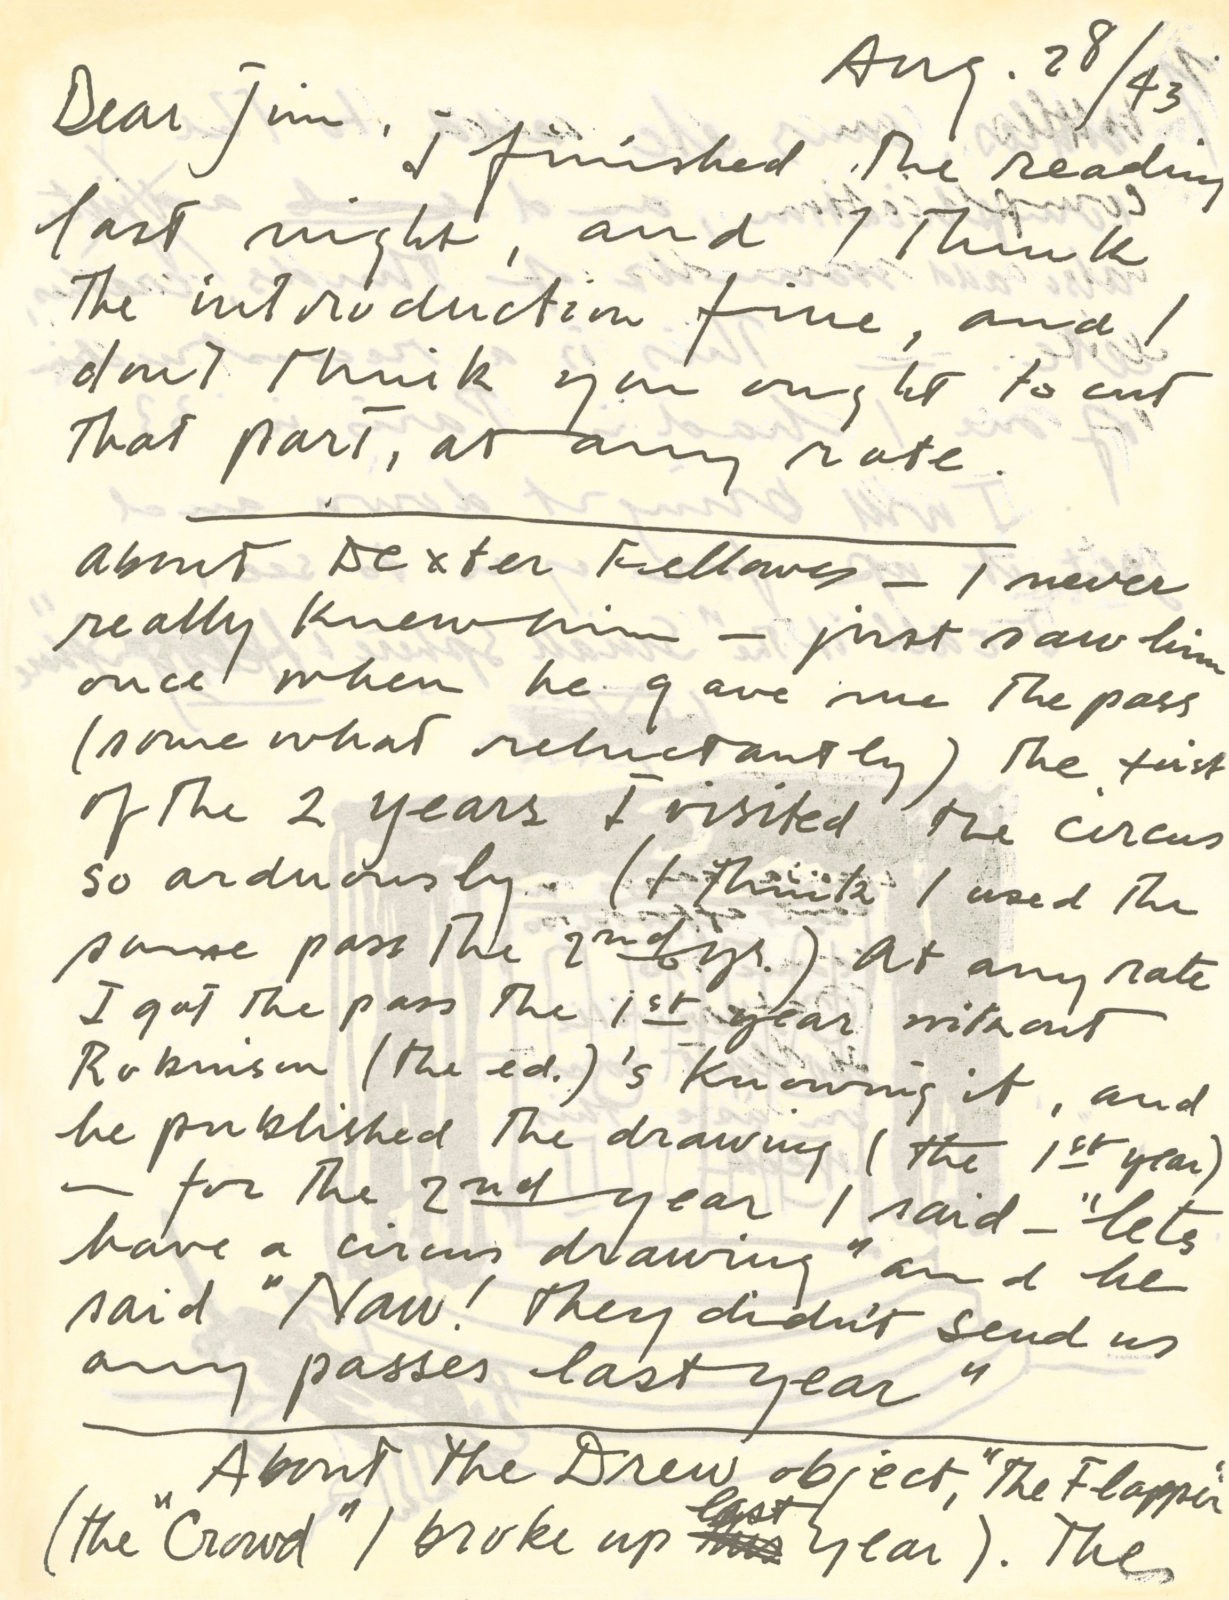 Letter to James Johnson Sweeney re: SSHS 1/3 (1943)